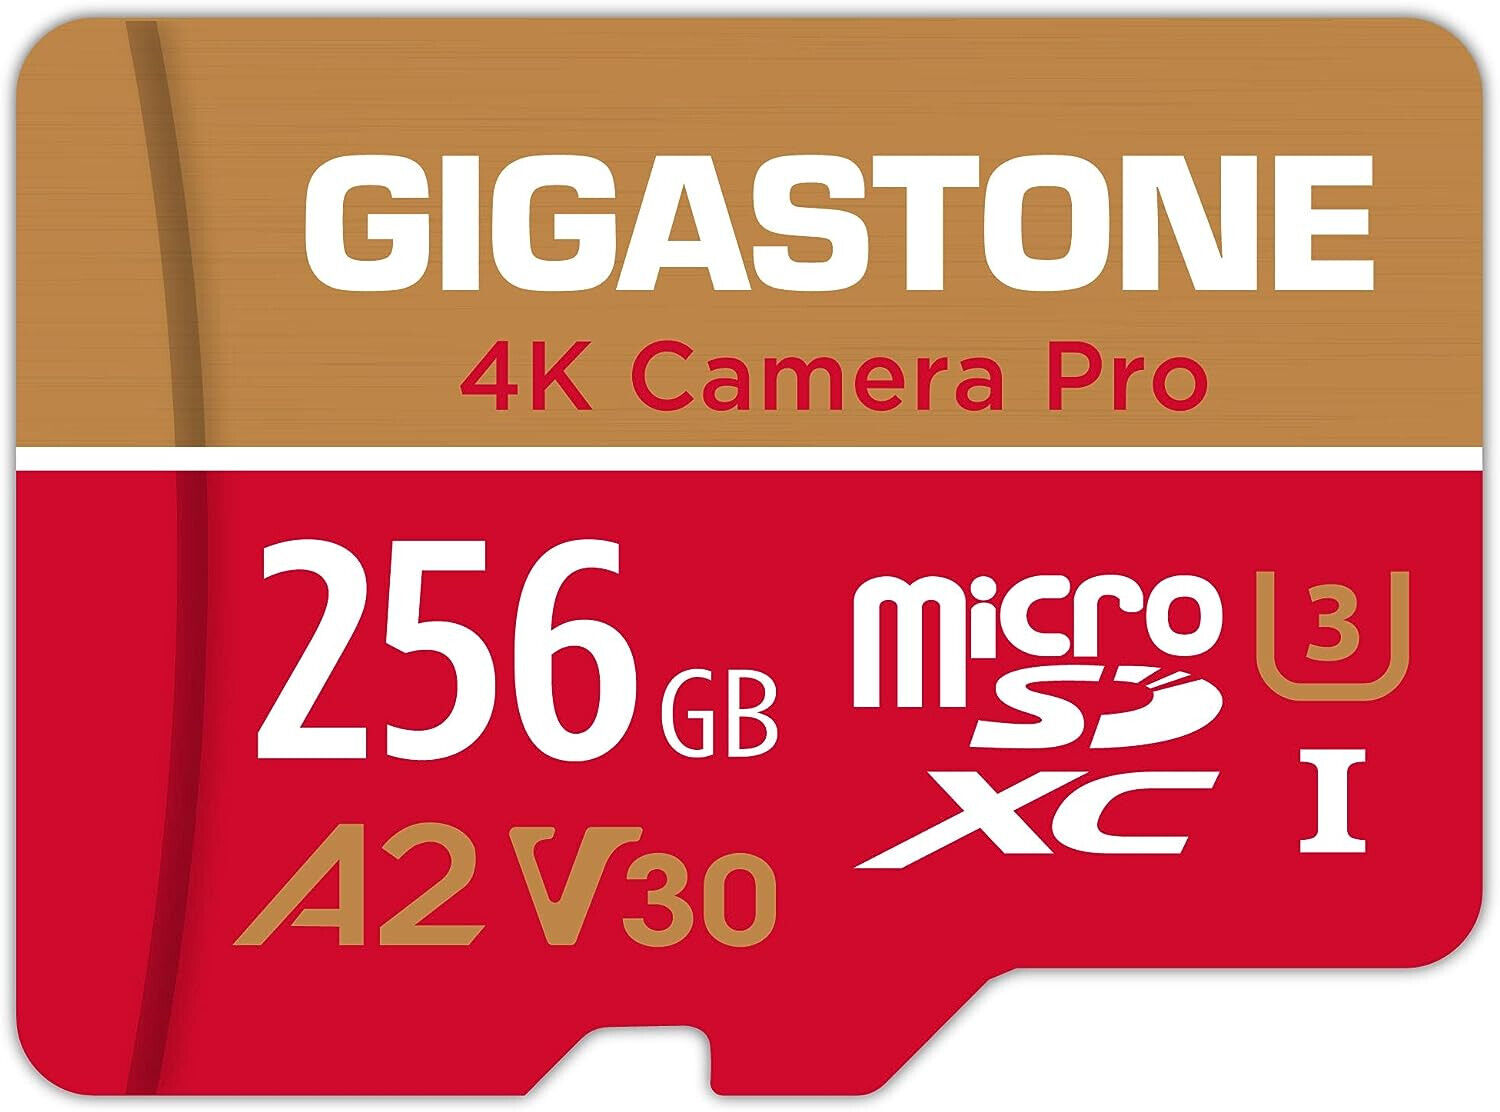 Gigastone 256GB Micro SD Card, GoPro SD Card, 4K UHD Video Recording, A2 V30